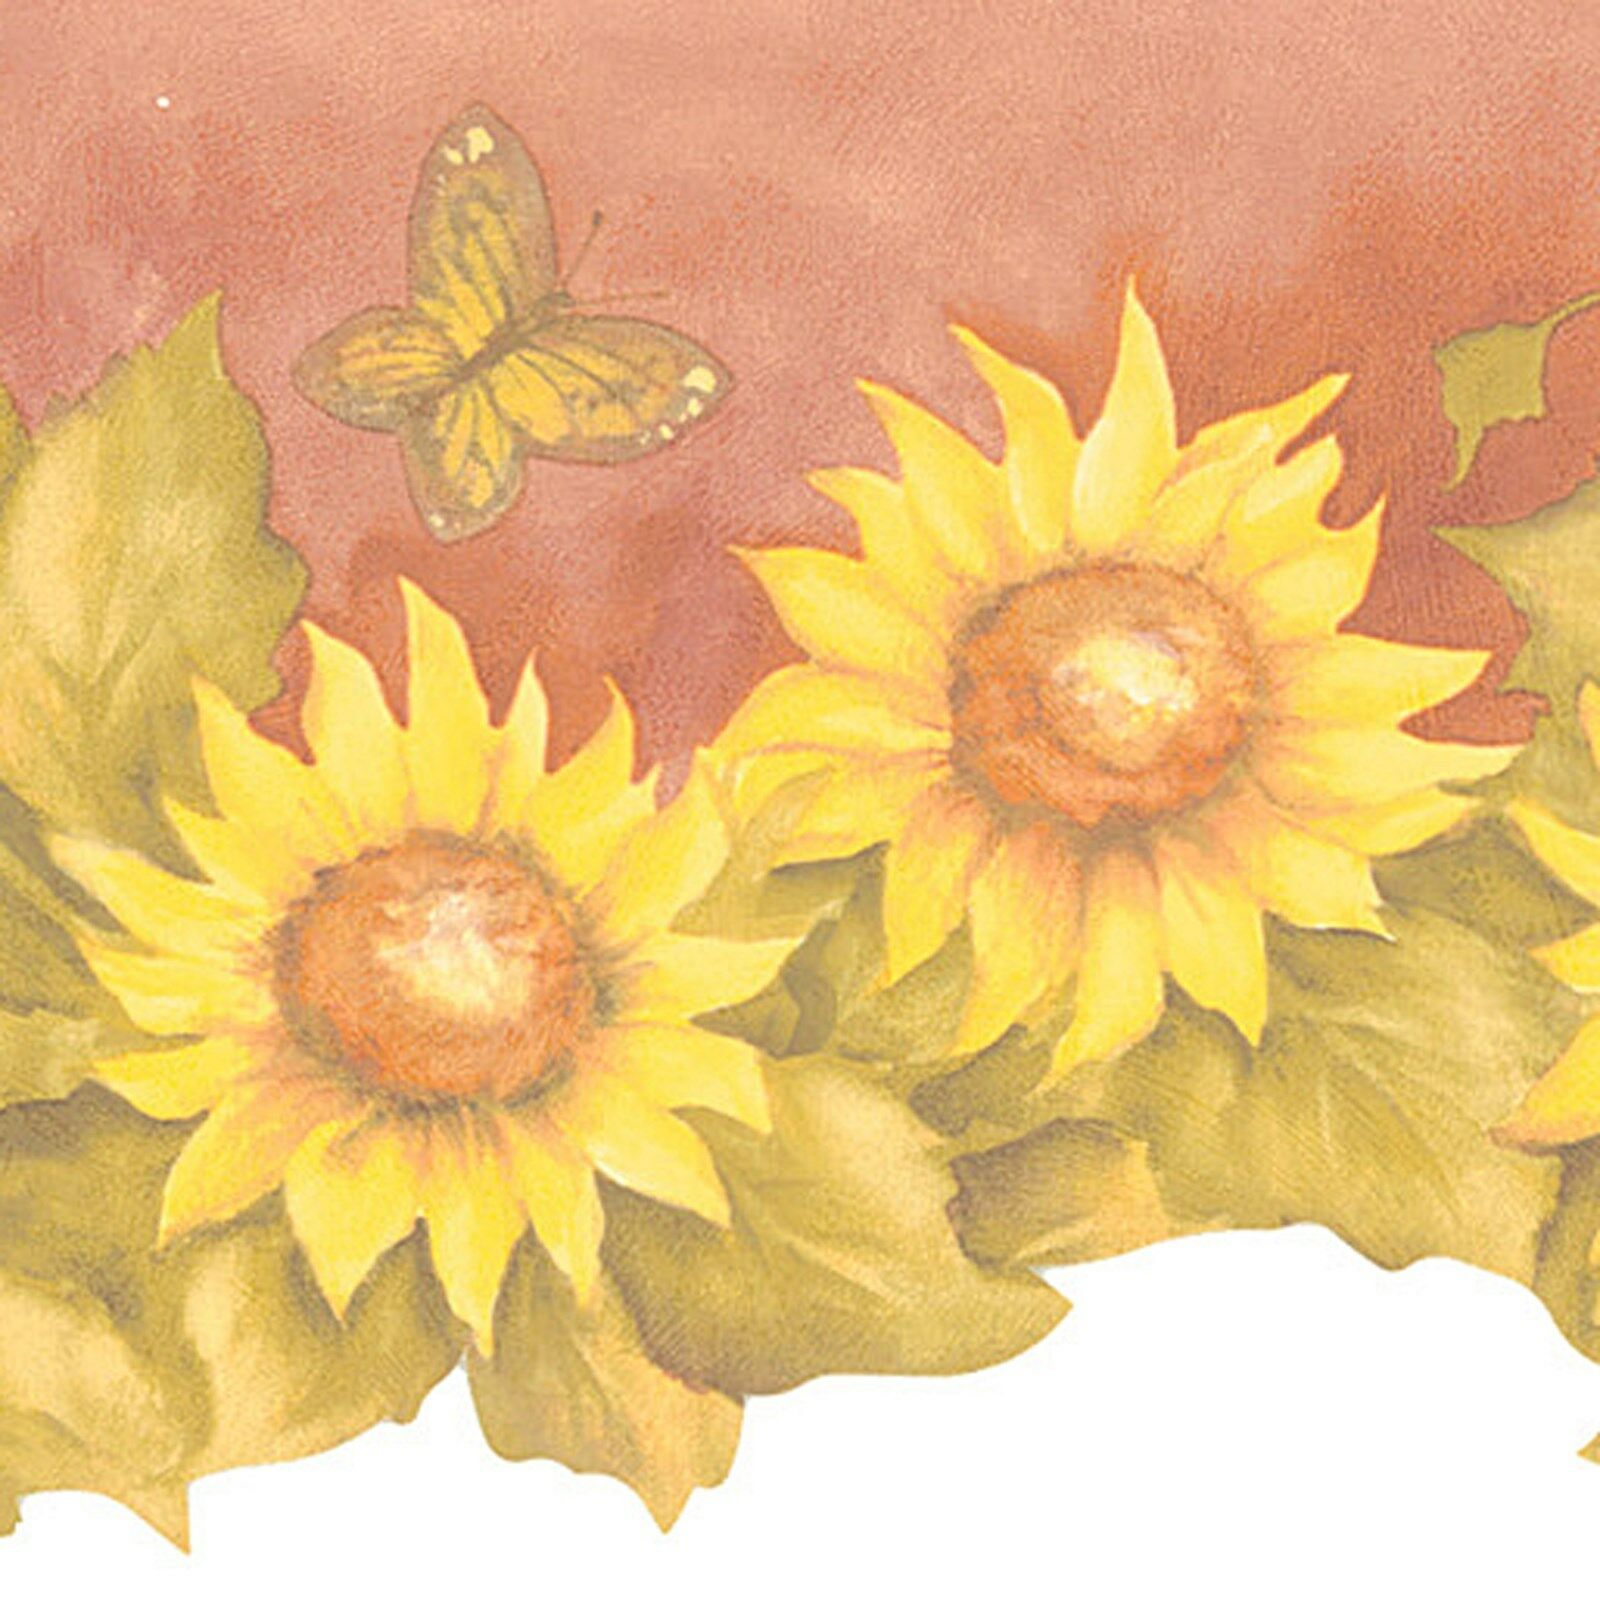 Upc 091212591578 Product Image For Sunflower & Butterflies - Cenefa De Girasoles - HD Wallpaper 